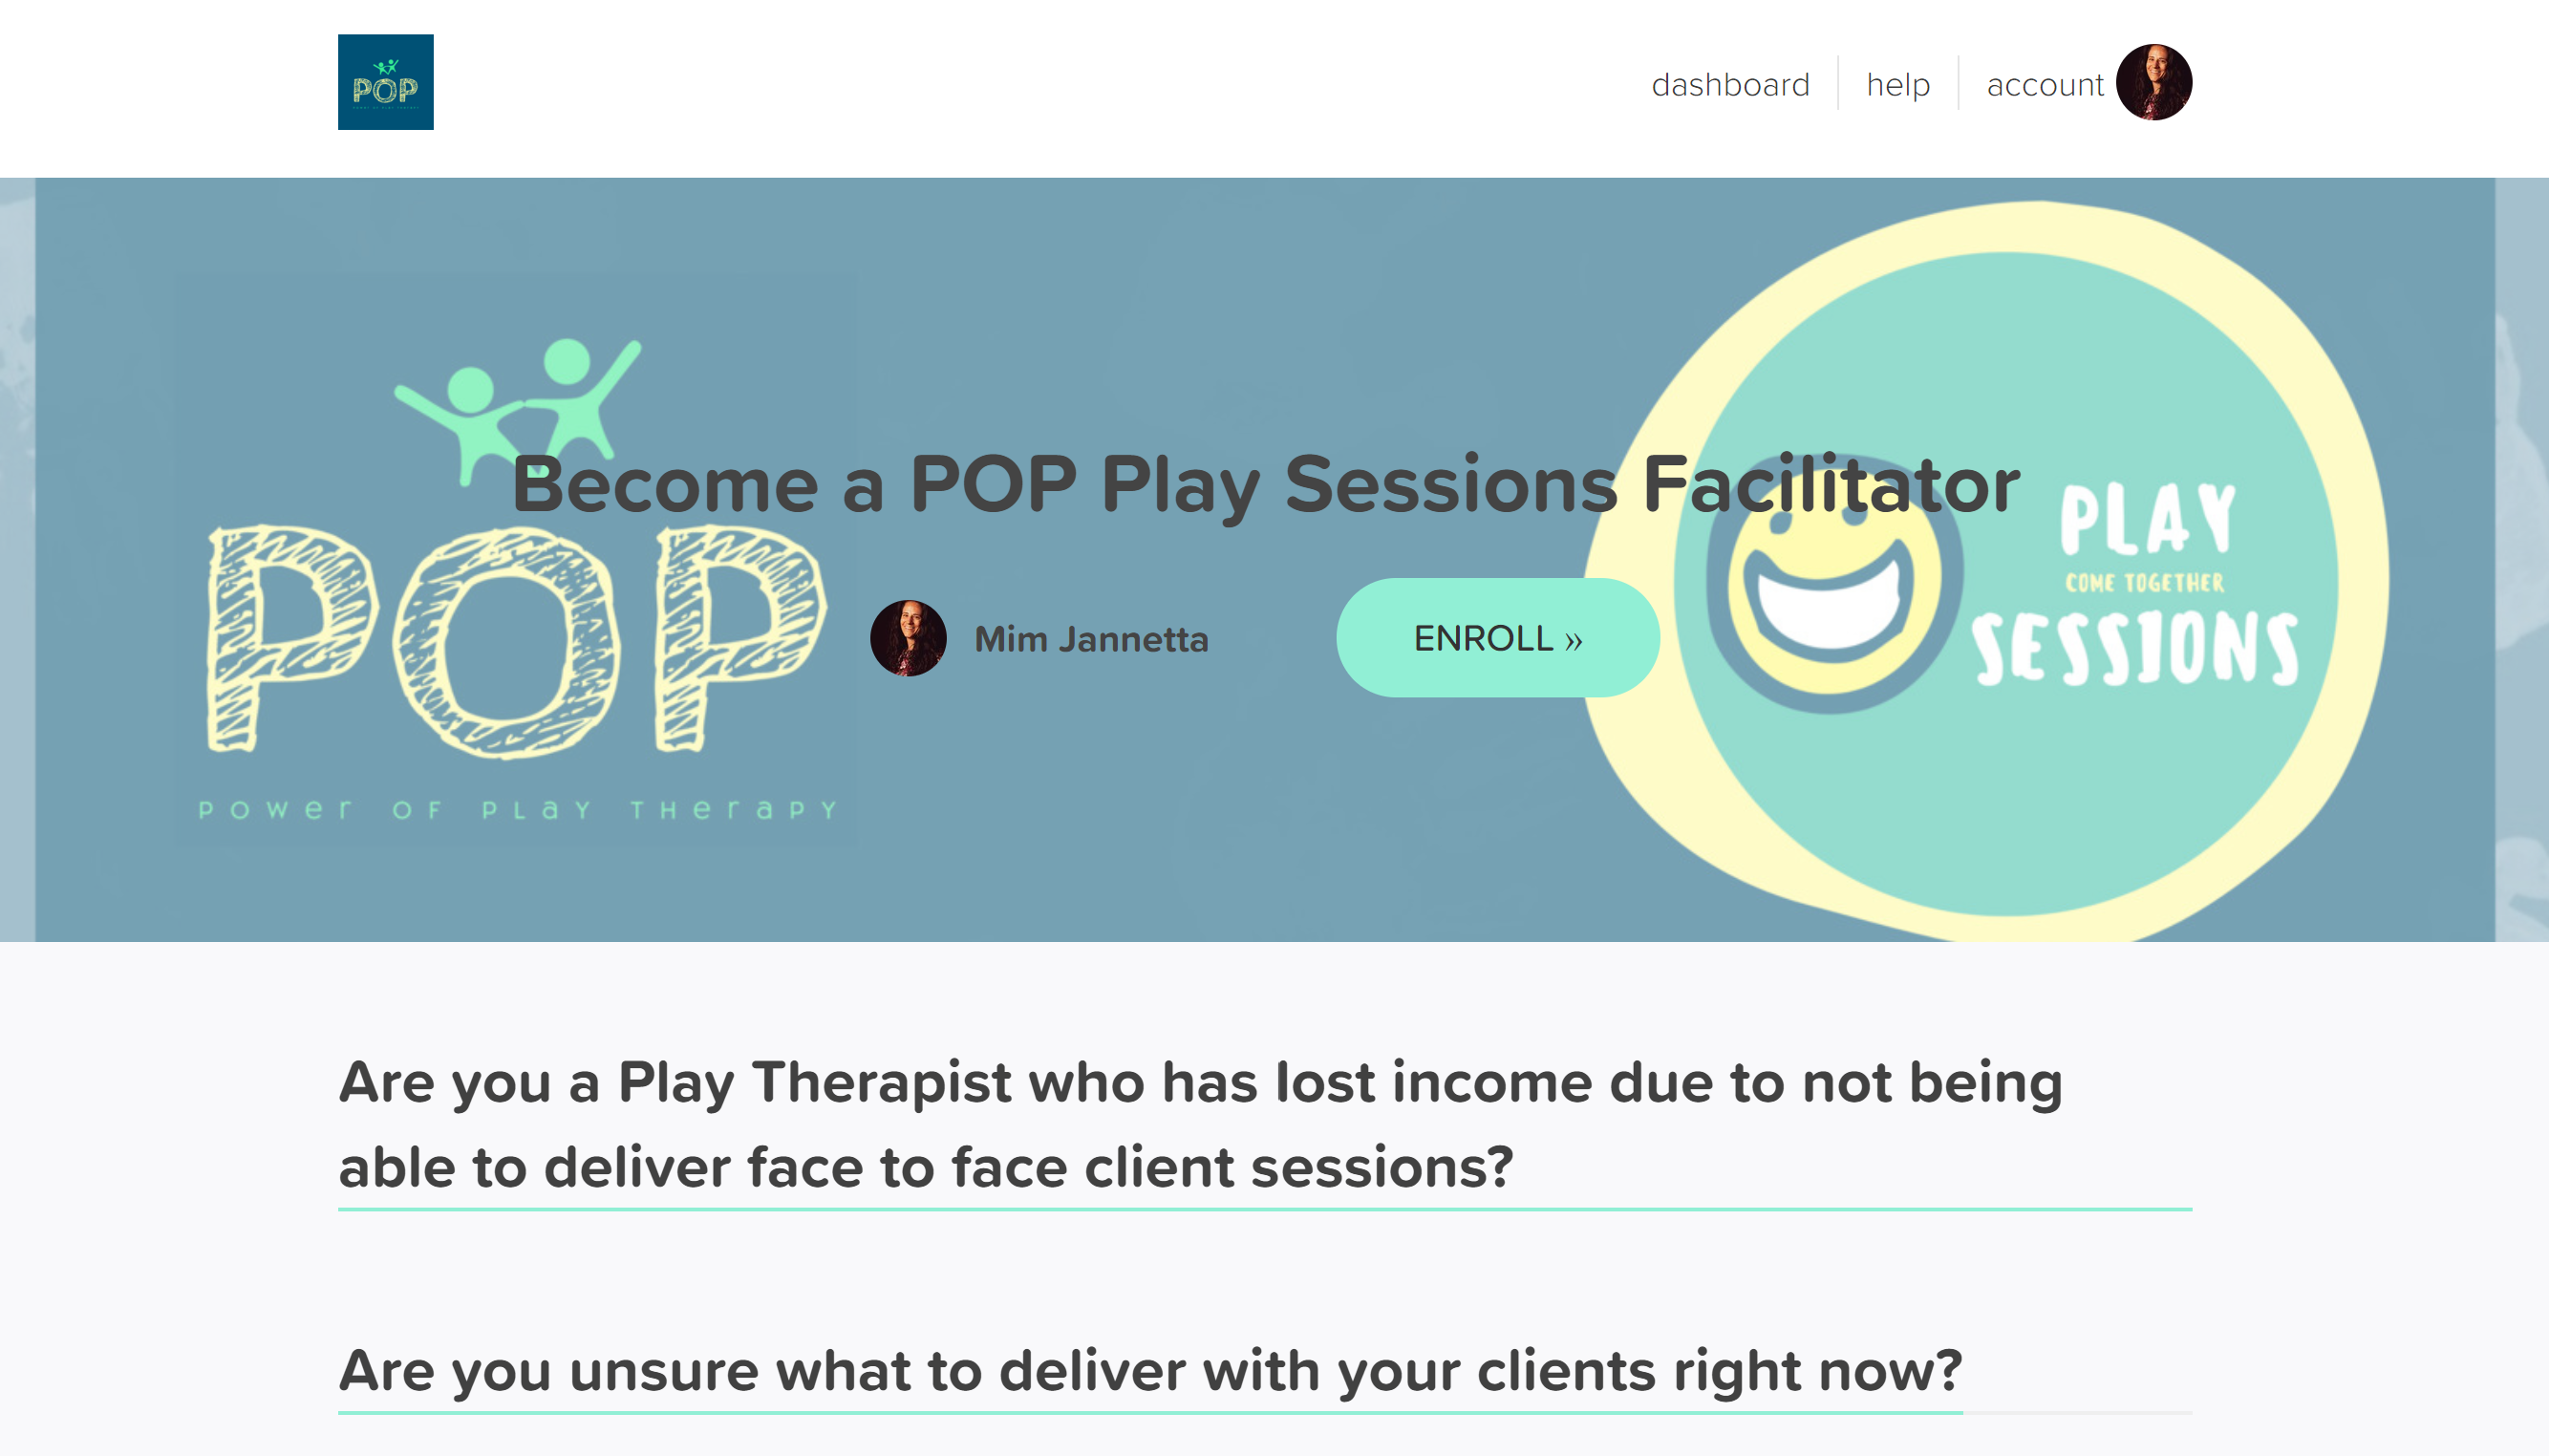 Become a POP Play Sessions Facilitator